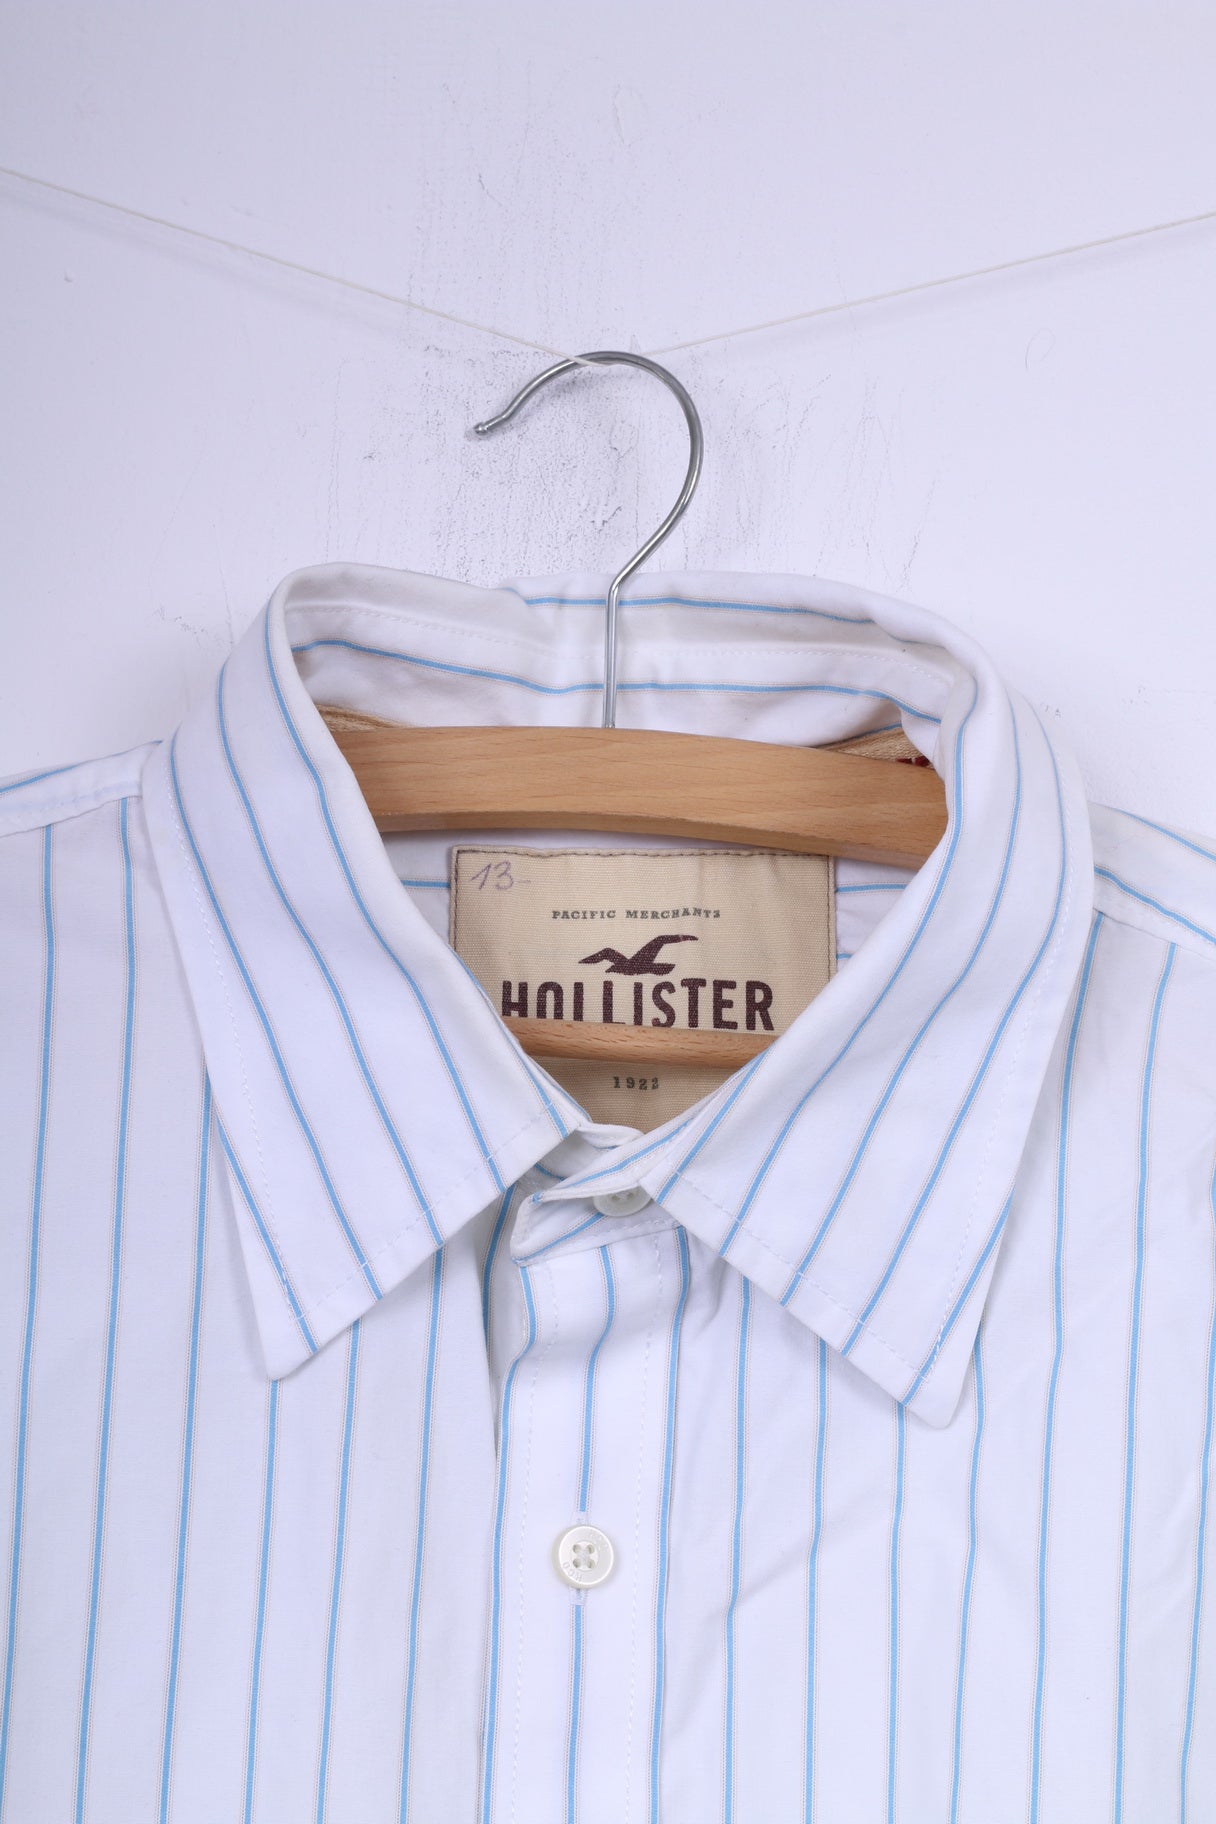 Hollister California Mens XL Casual Shirt Striped White Long